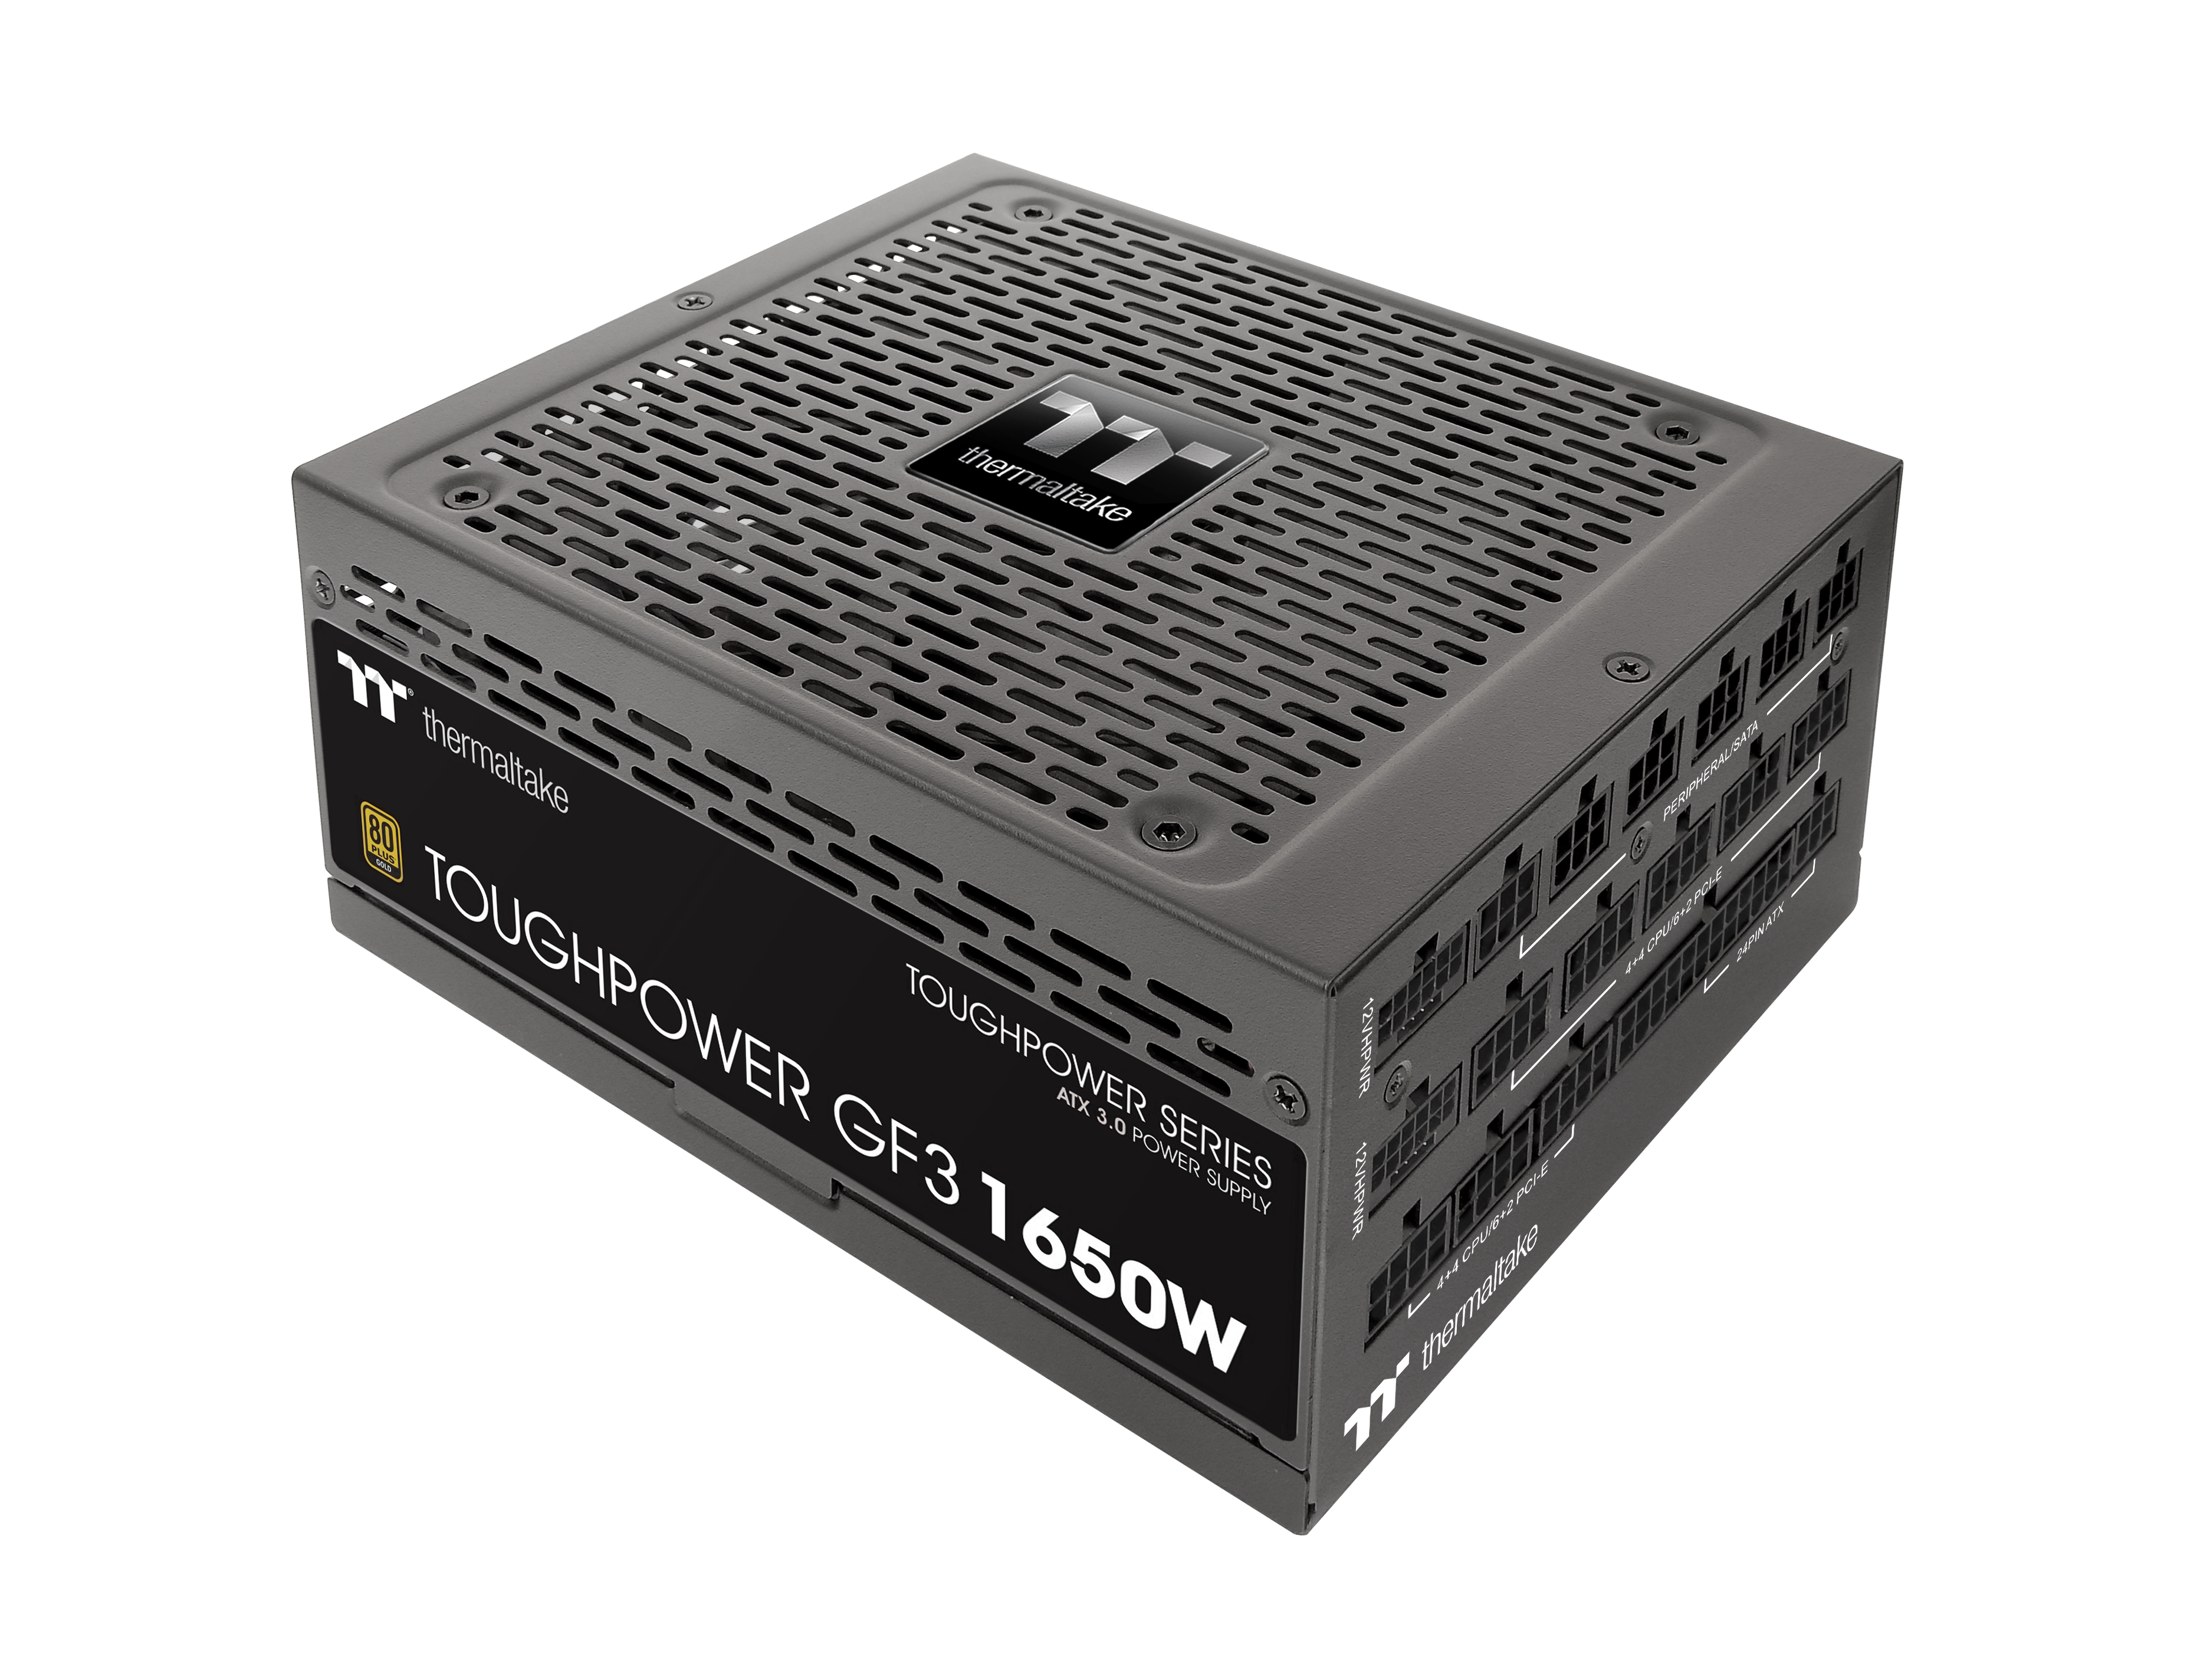 ThermalTake - Thermaltake Toughpower GF3 1650W Fully Modular Native PCIE 5 80 Plus Gold Power Supply